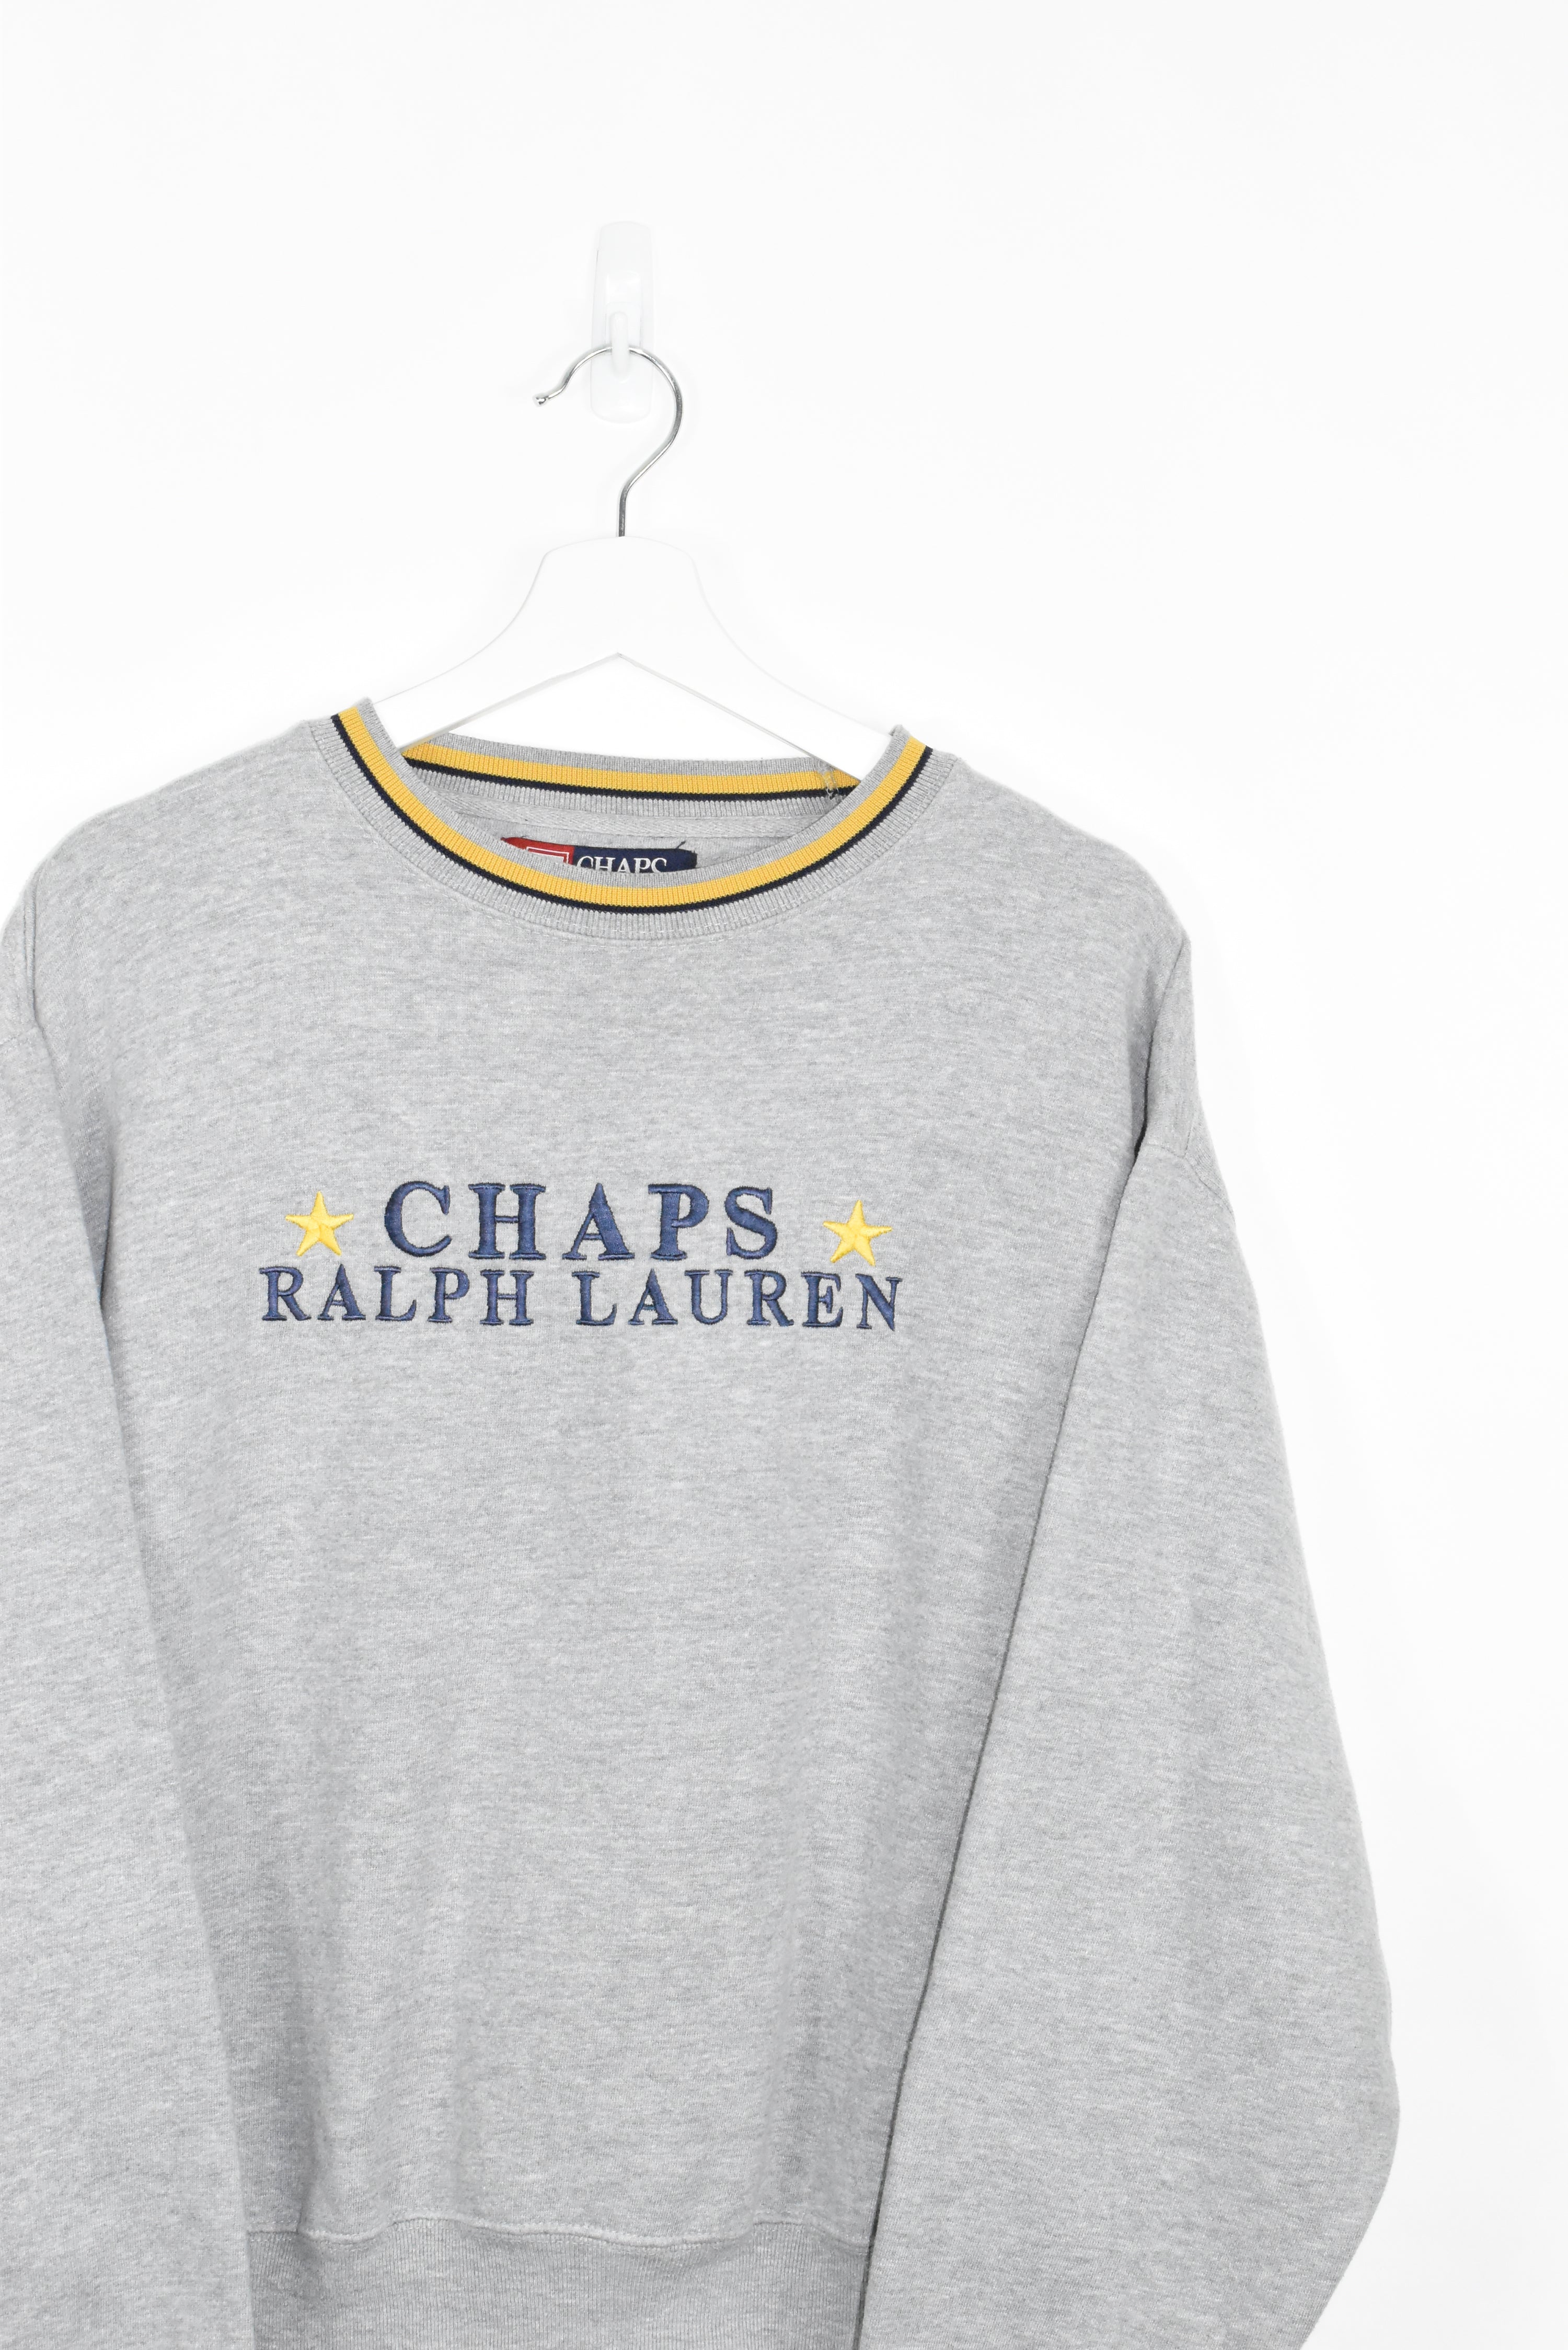 Vintage Chaps Ralph Lauren Rare Embroidery Sweatshirt Medium (Baggy)